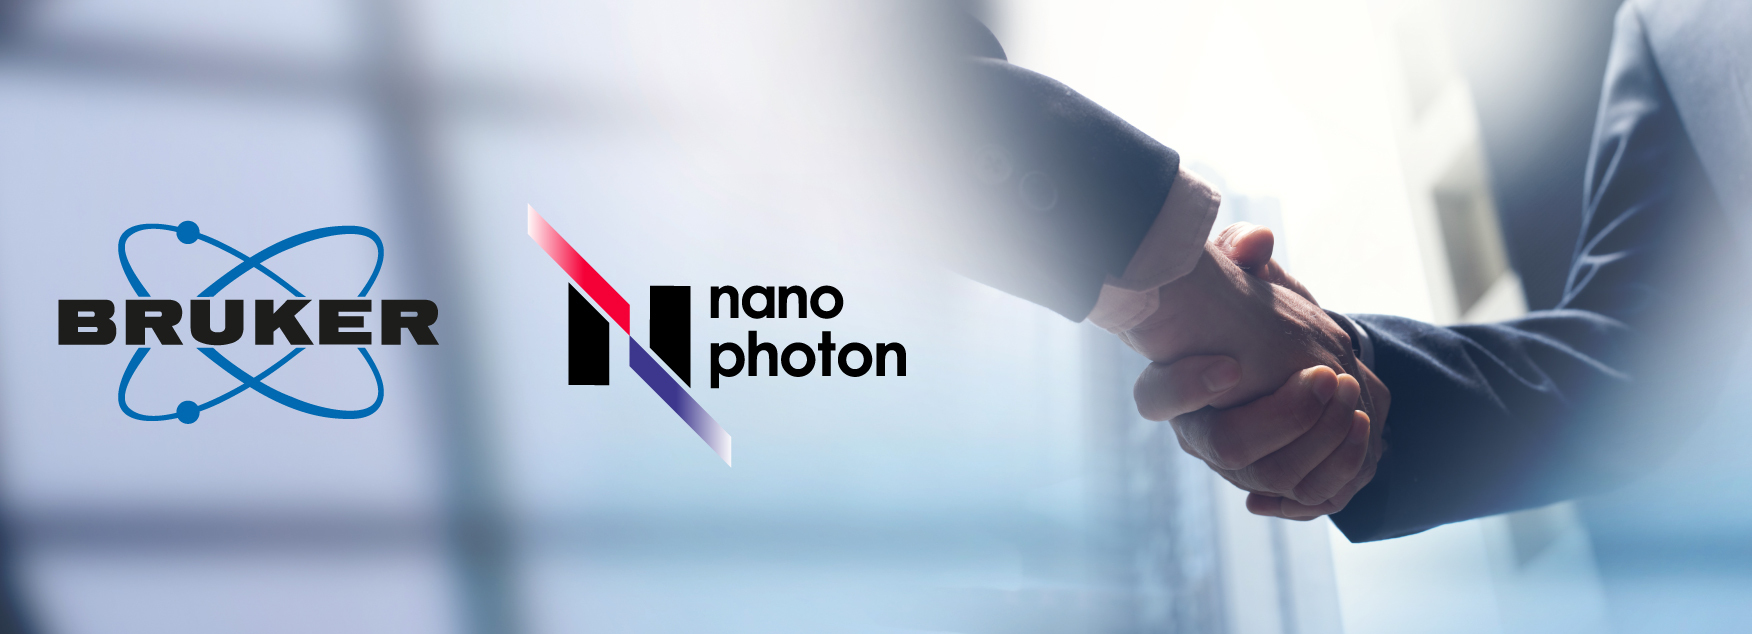 Nanophoton Corporation, an Osaka University start-up, joins the Bruker group through M&A